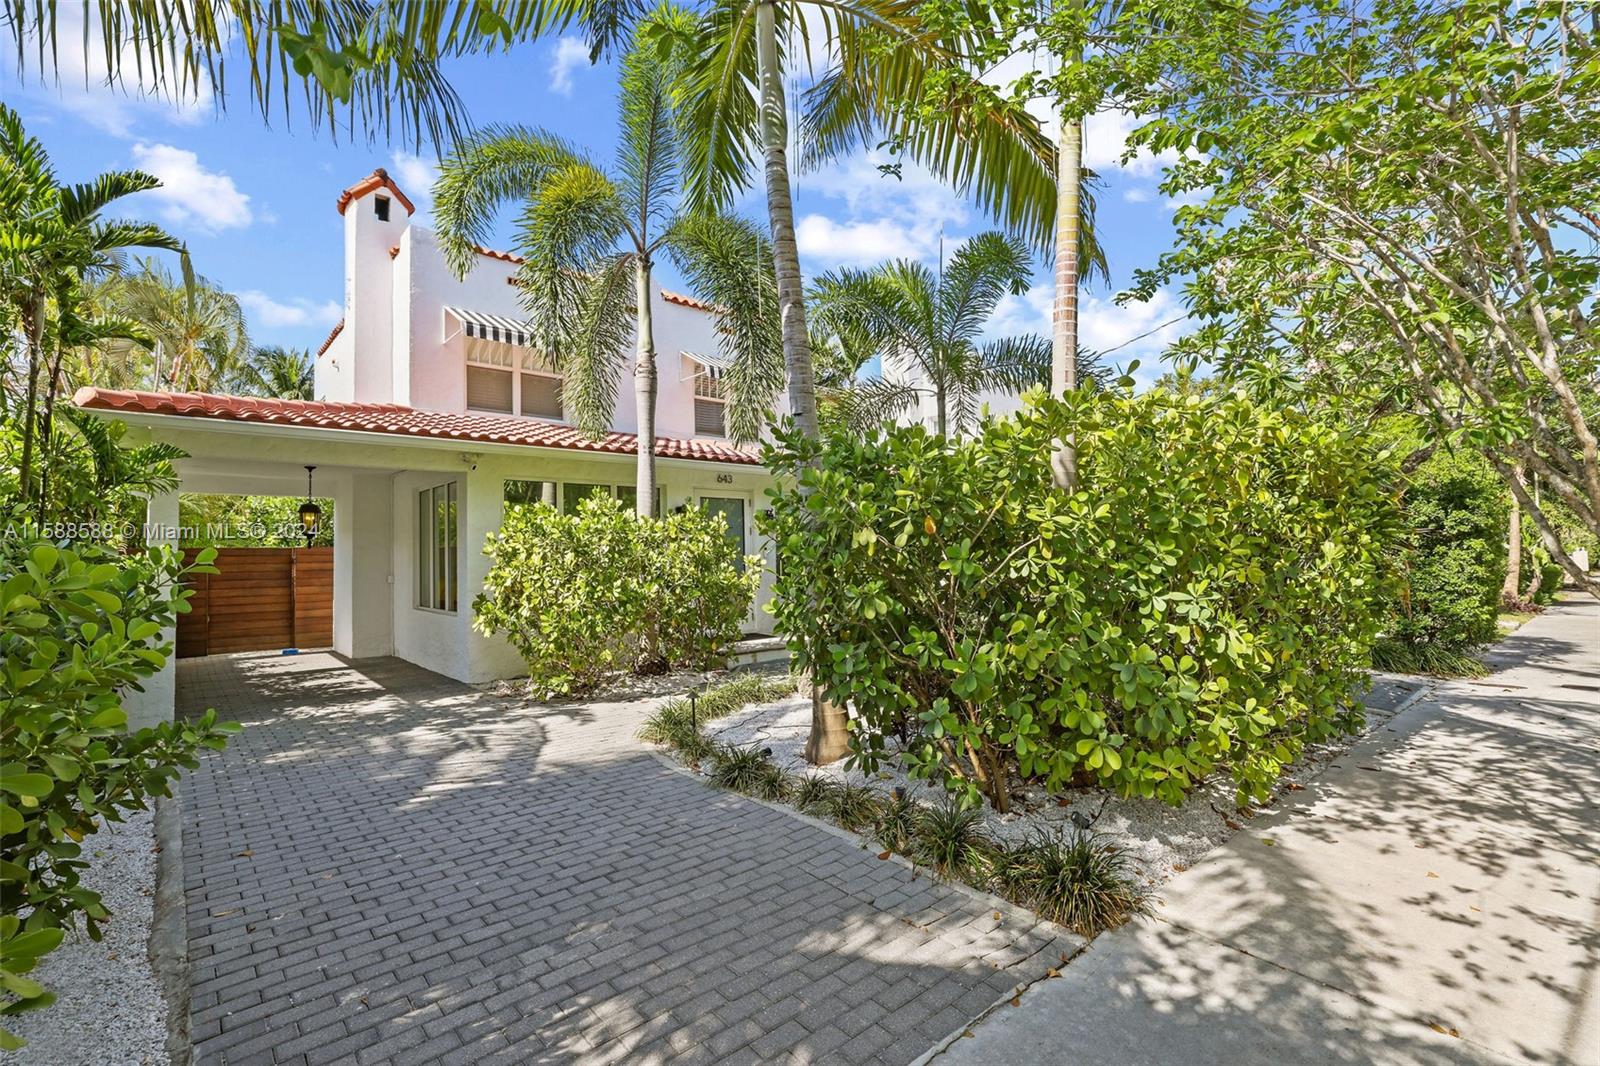 Rental Property at 643 Ne 69th St, Miami, Broward County, Florida - Bedrooms: 2 
Bathrooms: 3  - $7,500 MO.